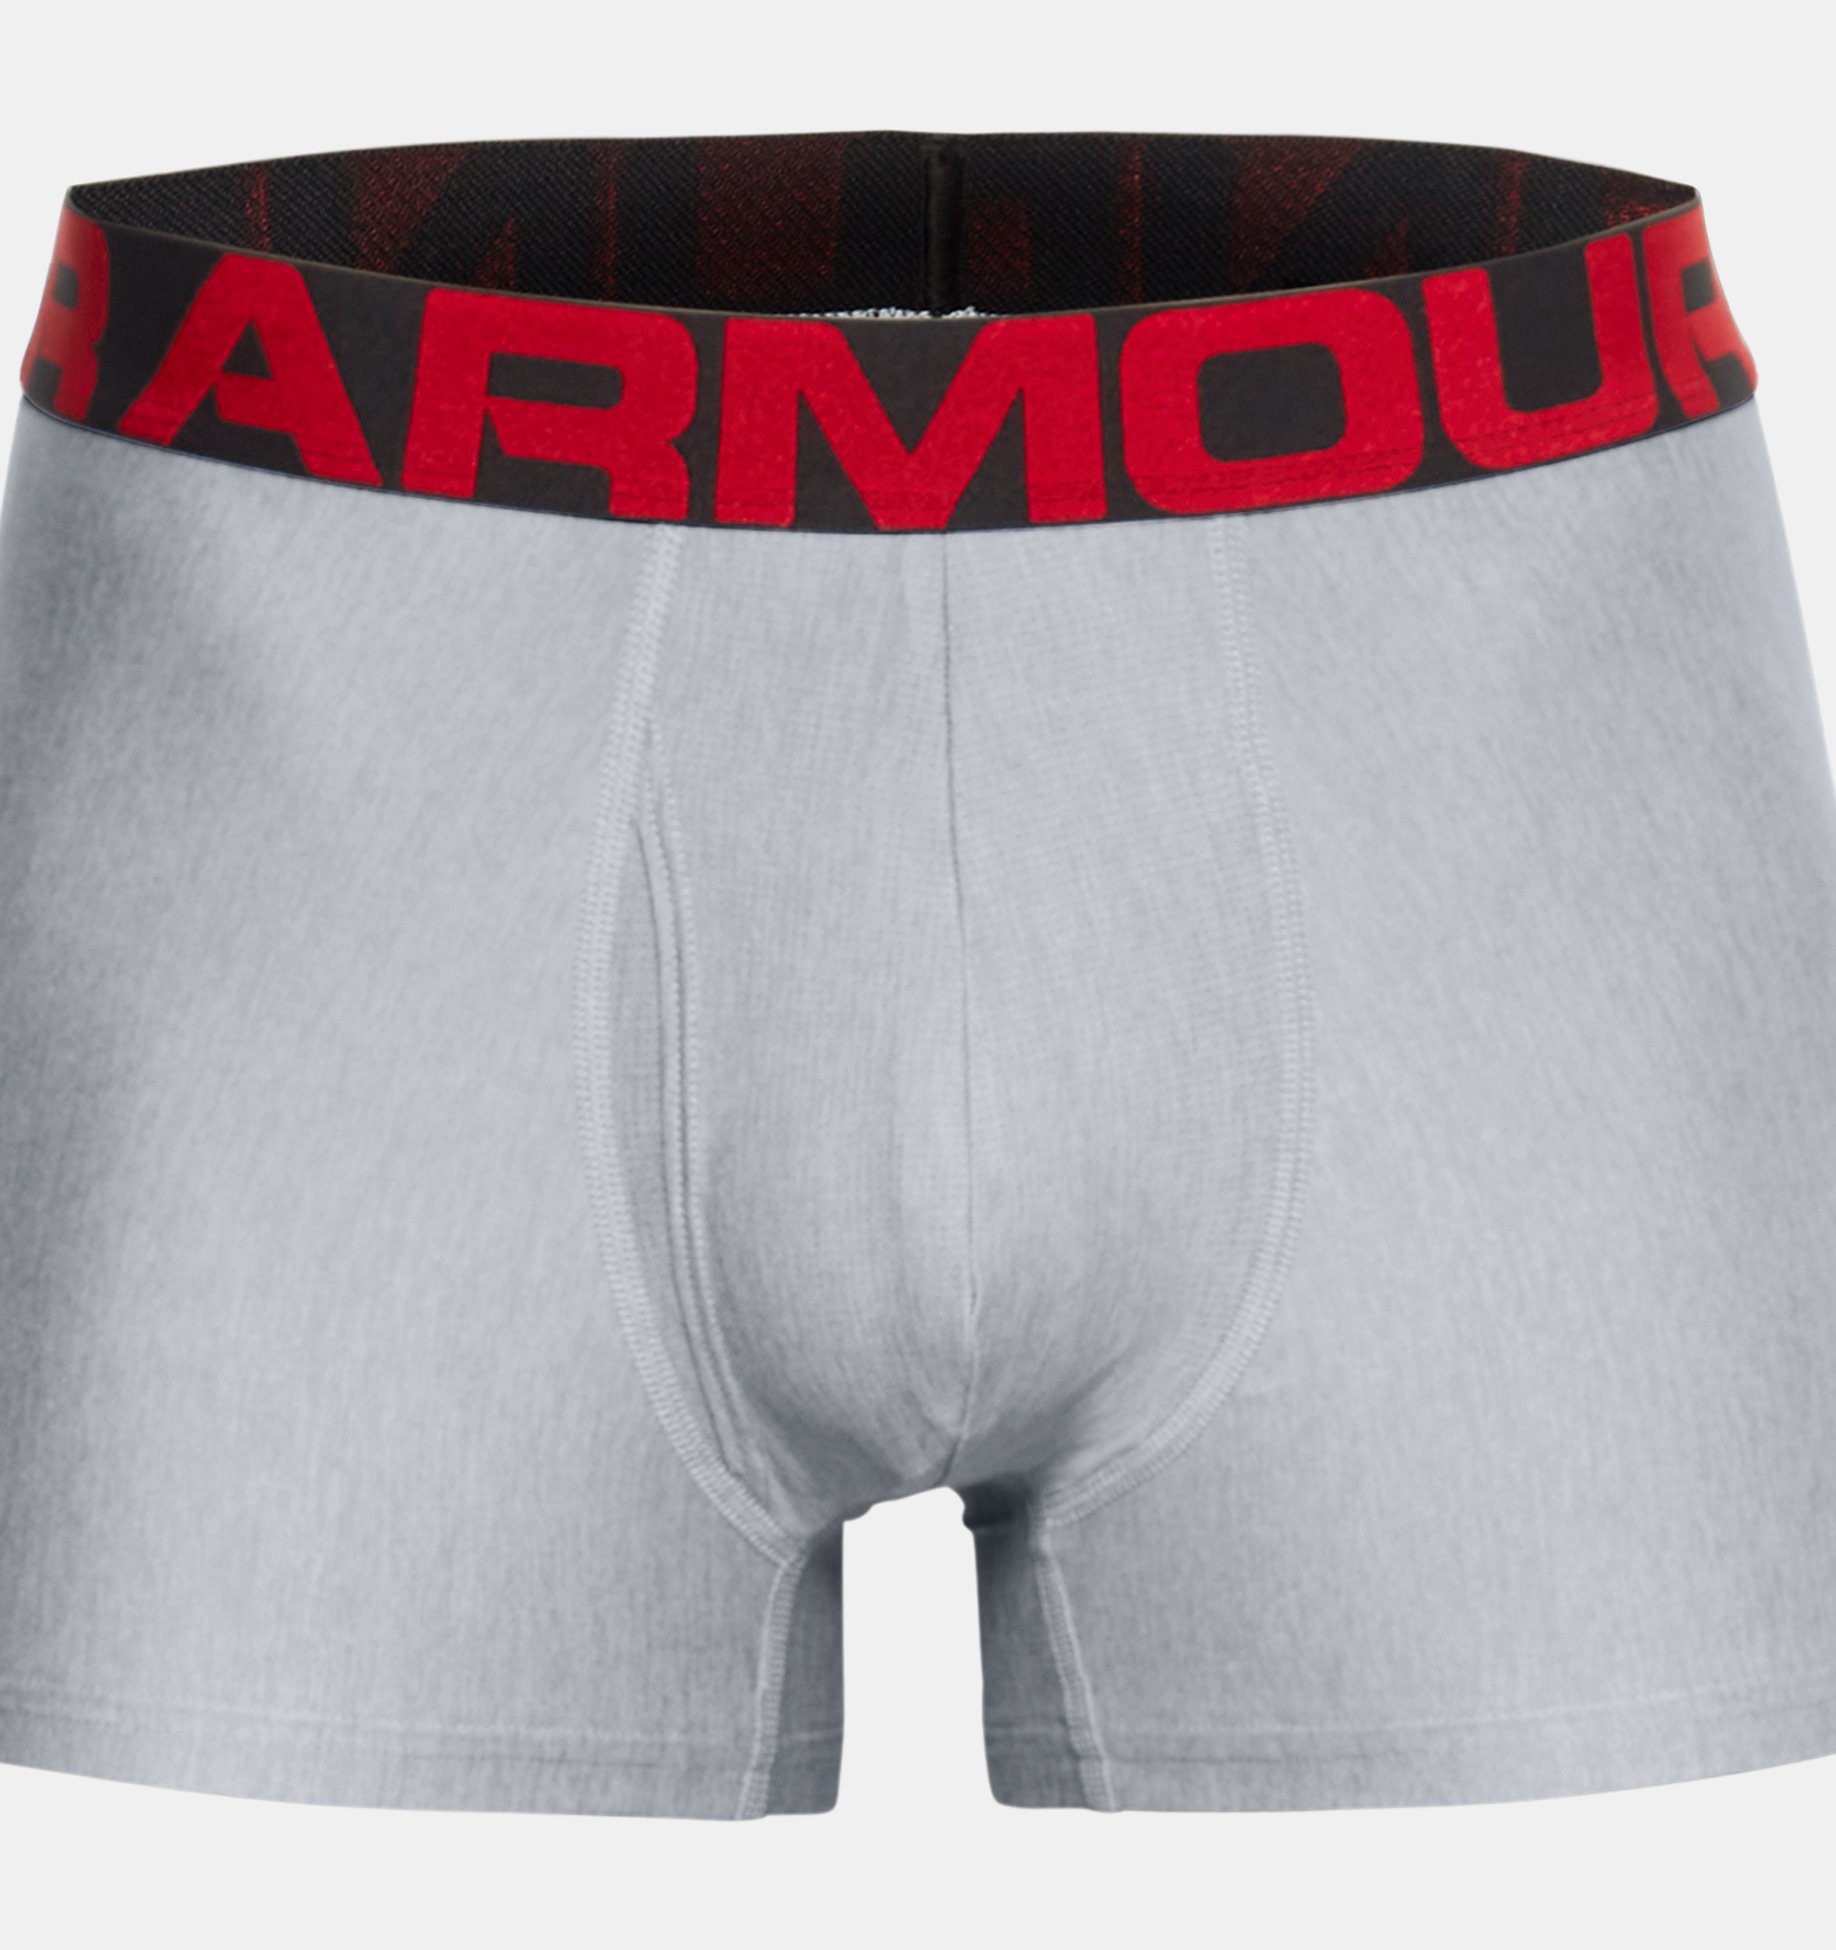 Under Armour Men's Underwear, Original Knit Boxer Loose Fit